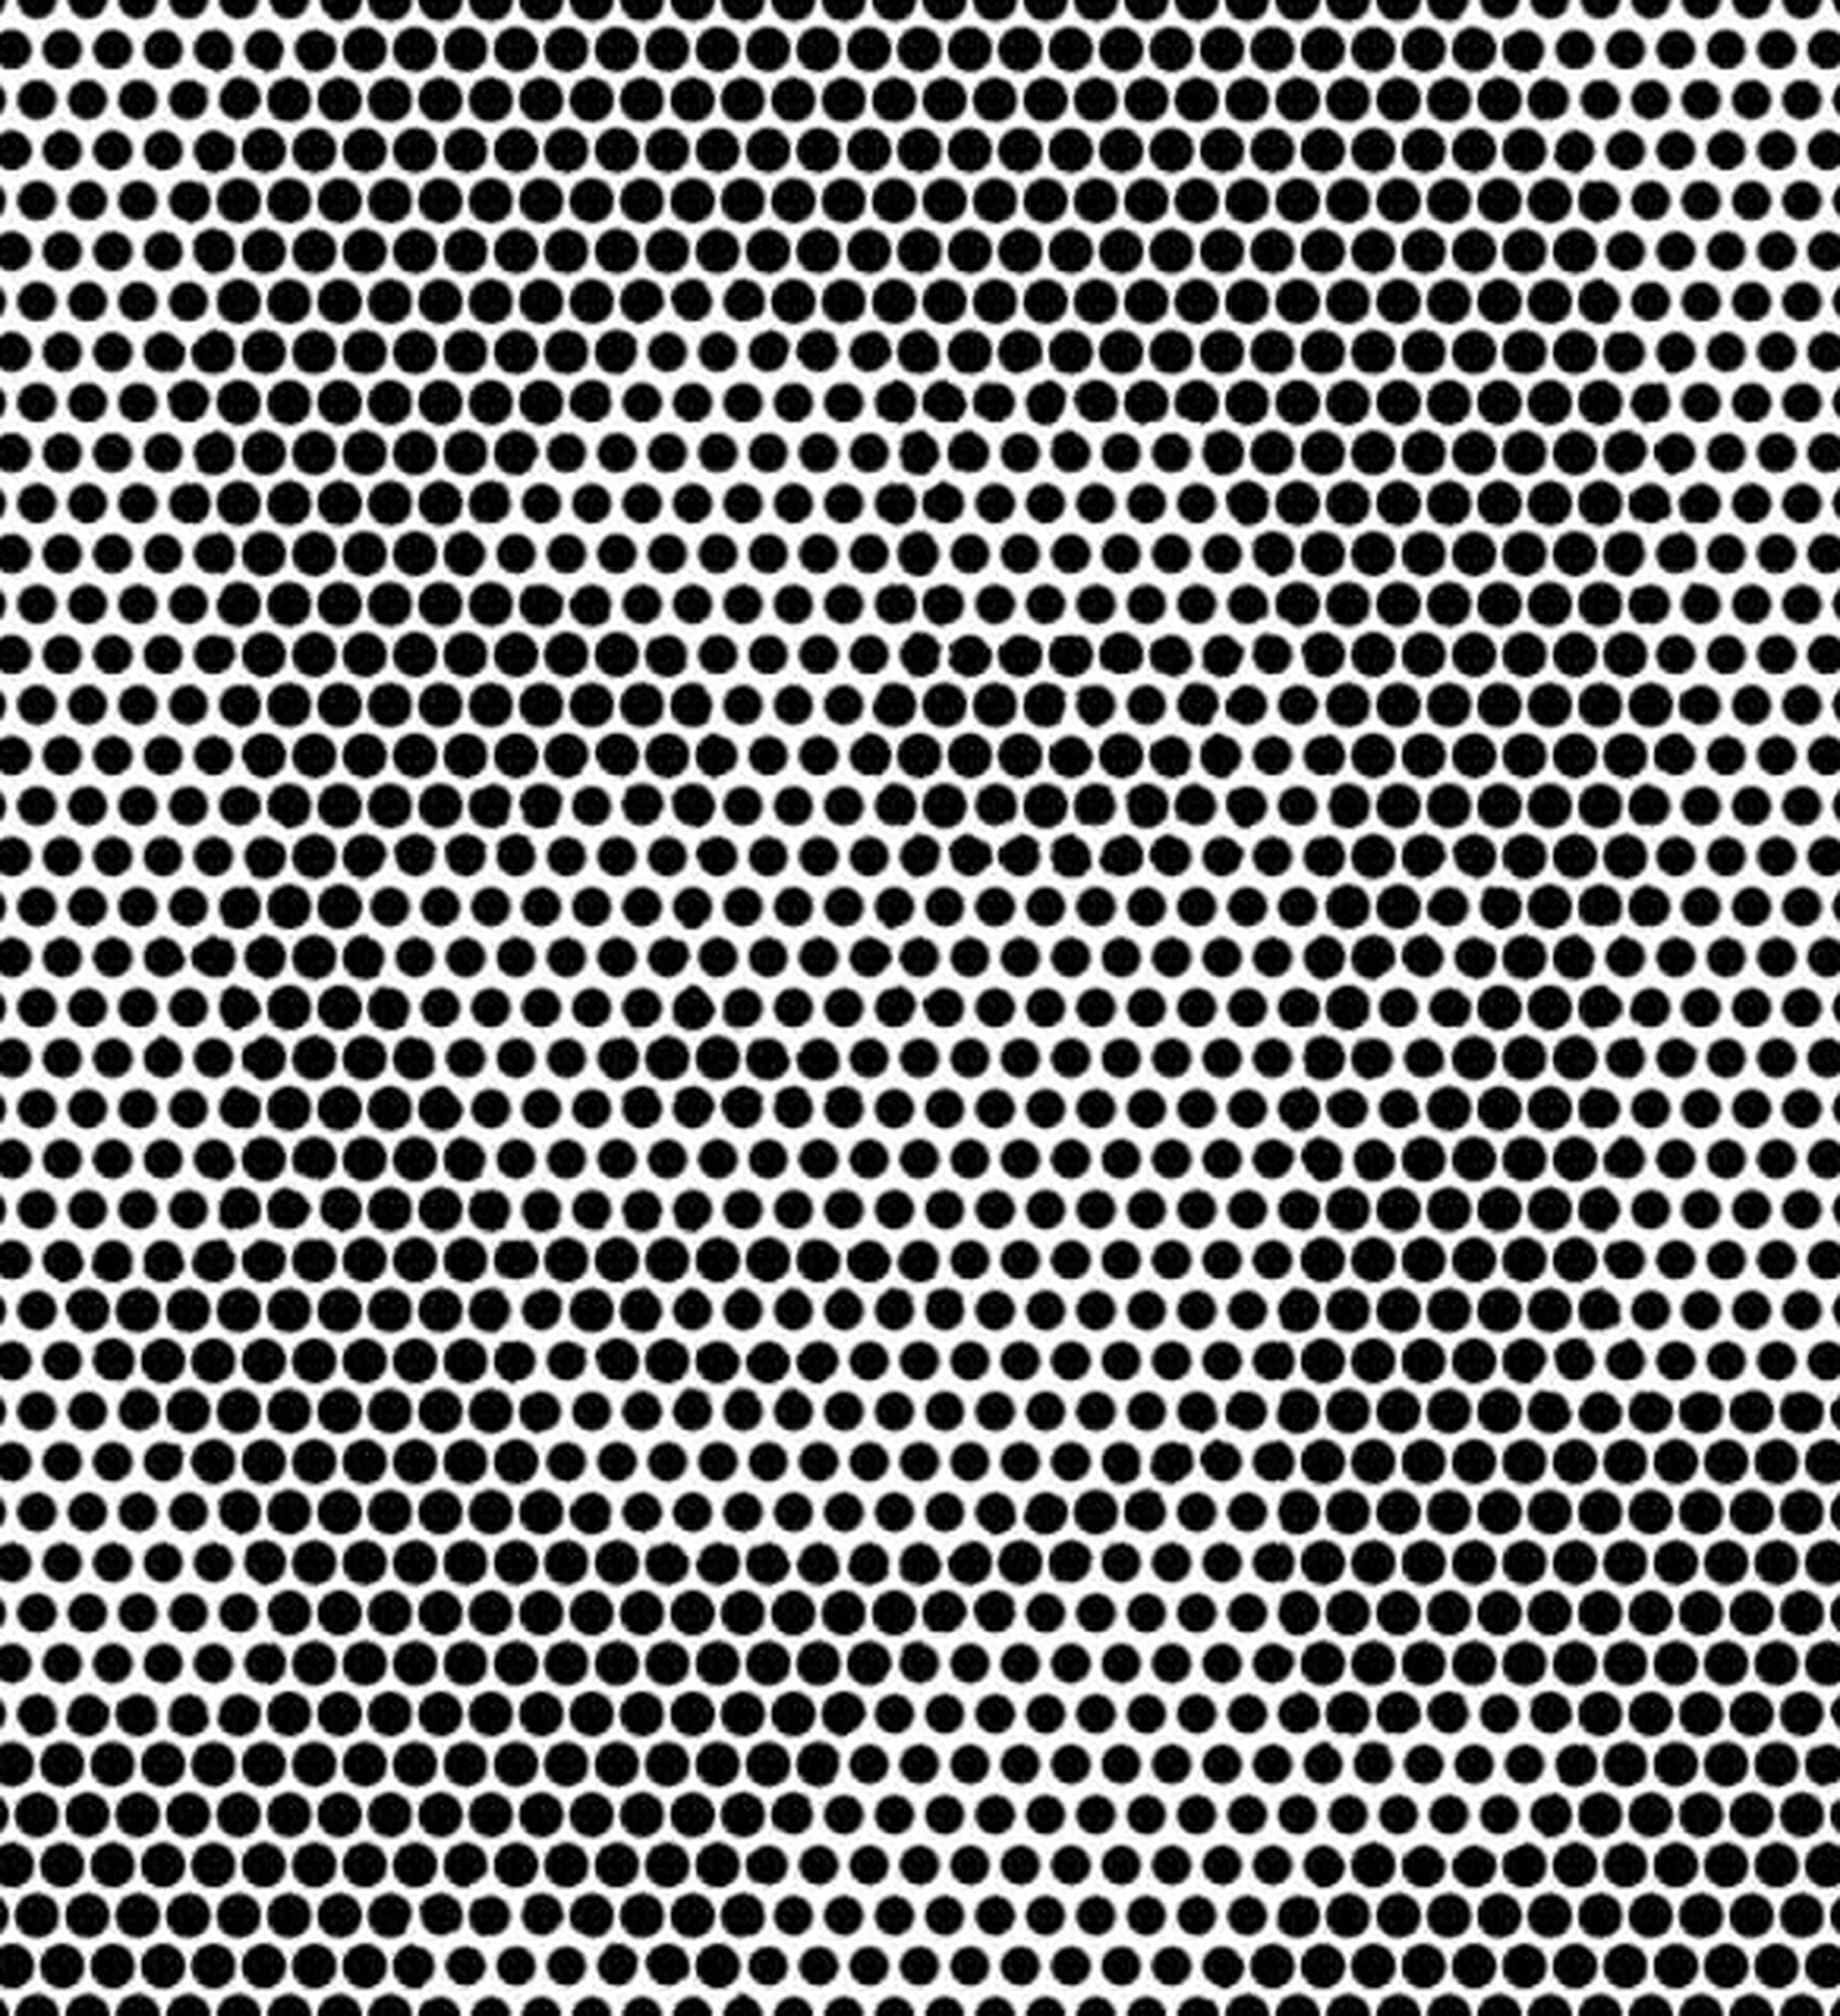 Ilusion optica famoso reto visual